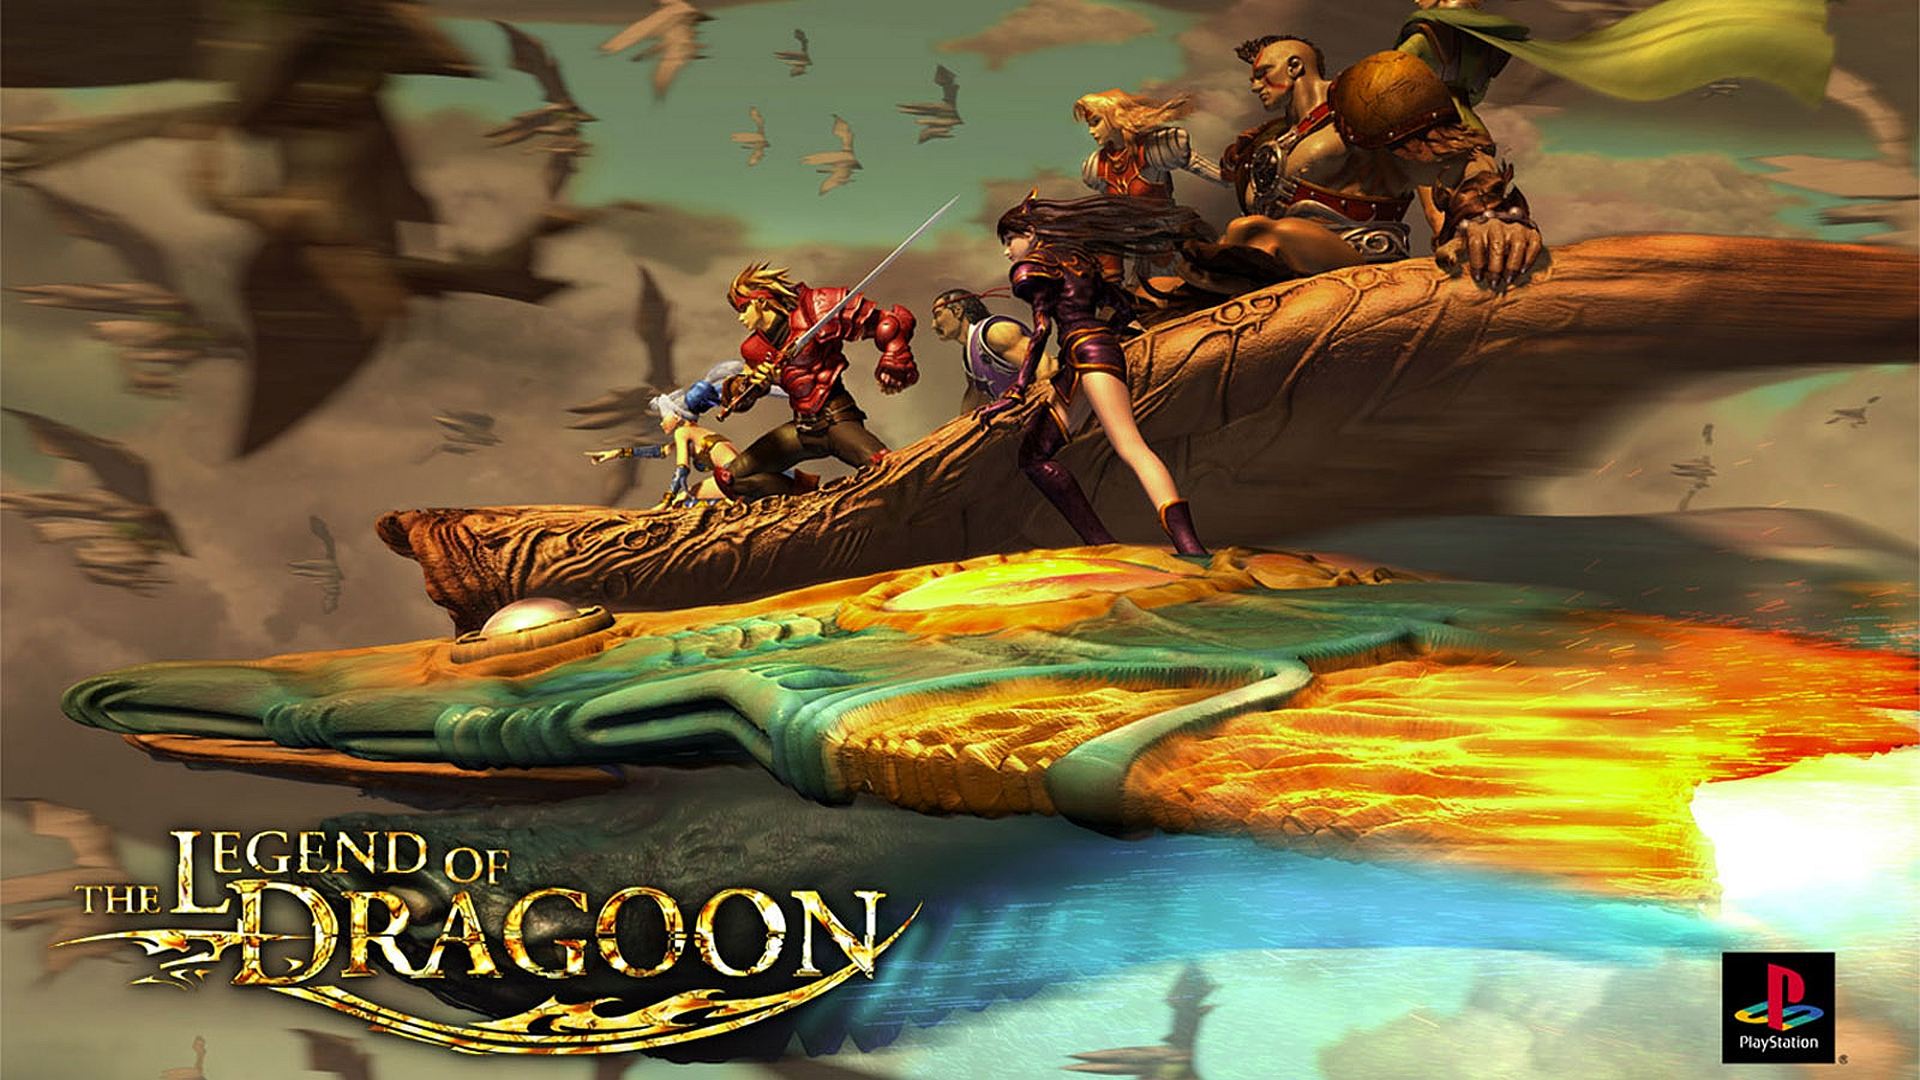 Legend of Dragoon. Credits: Sony